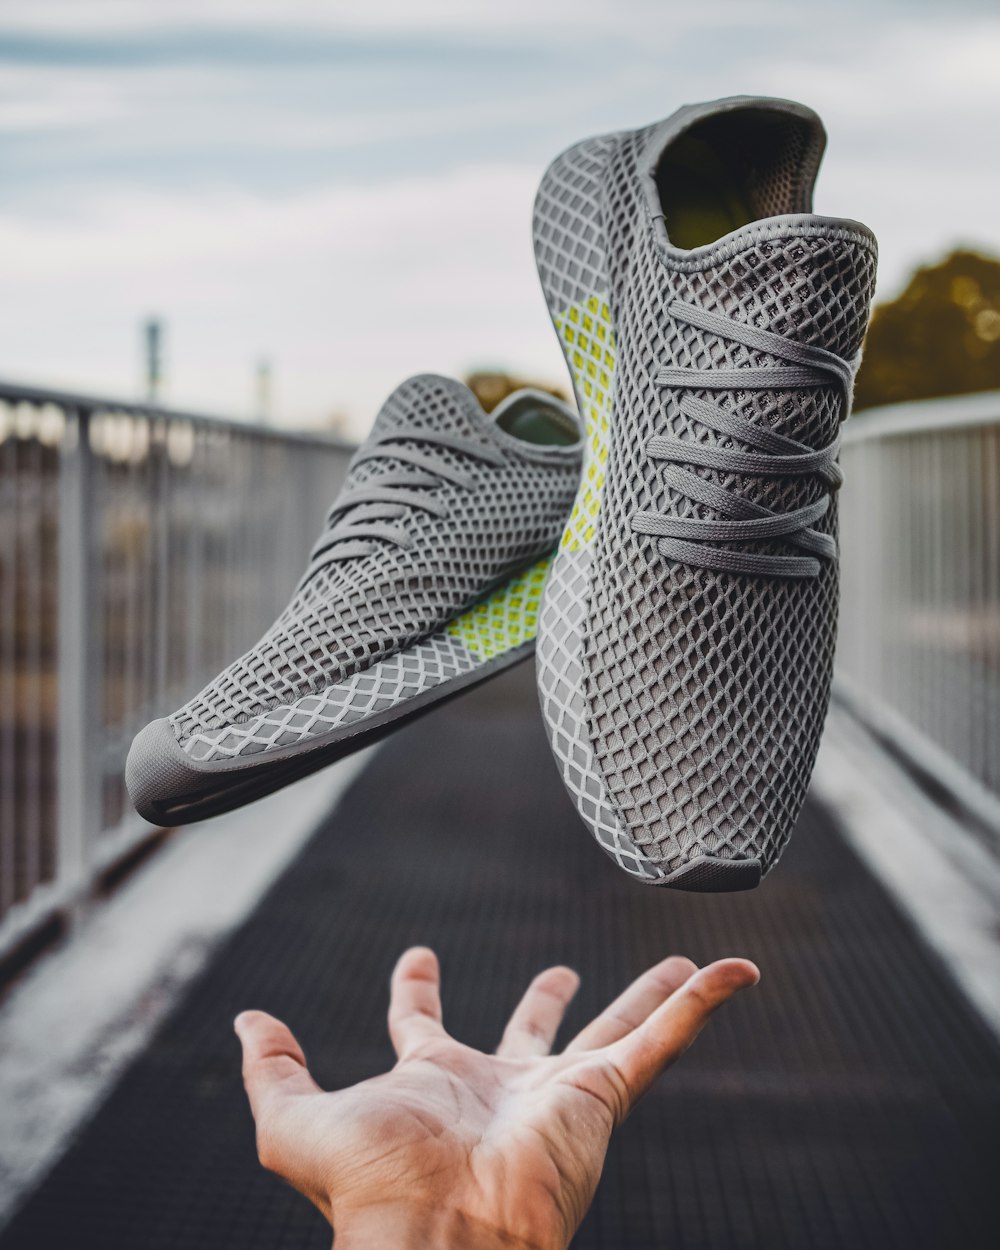 Pair of gray running shoes photo – Free Slovakia Image on Unsplash